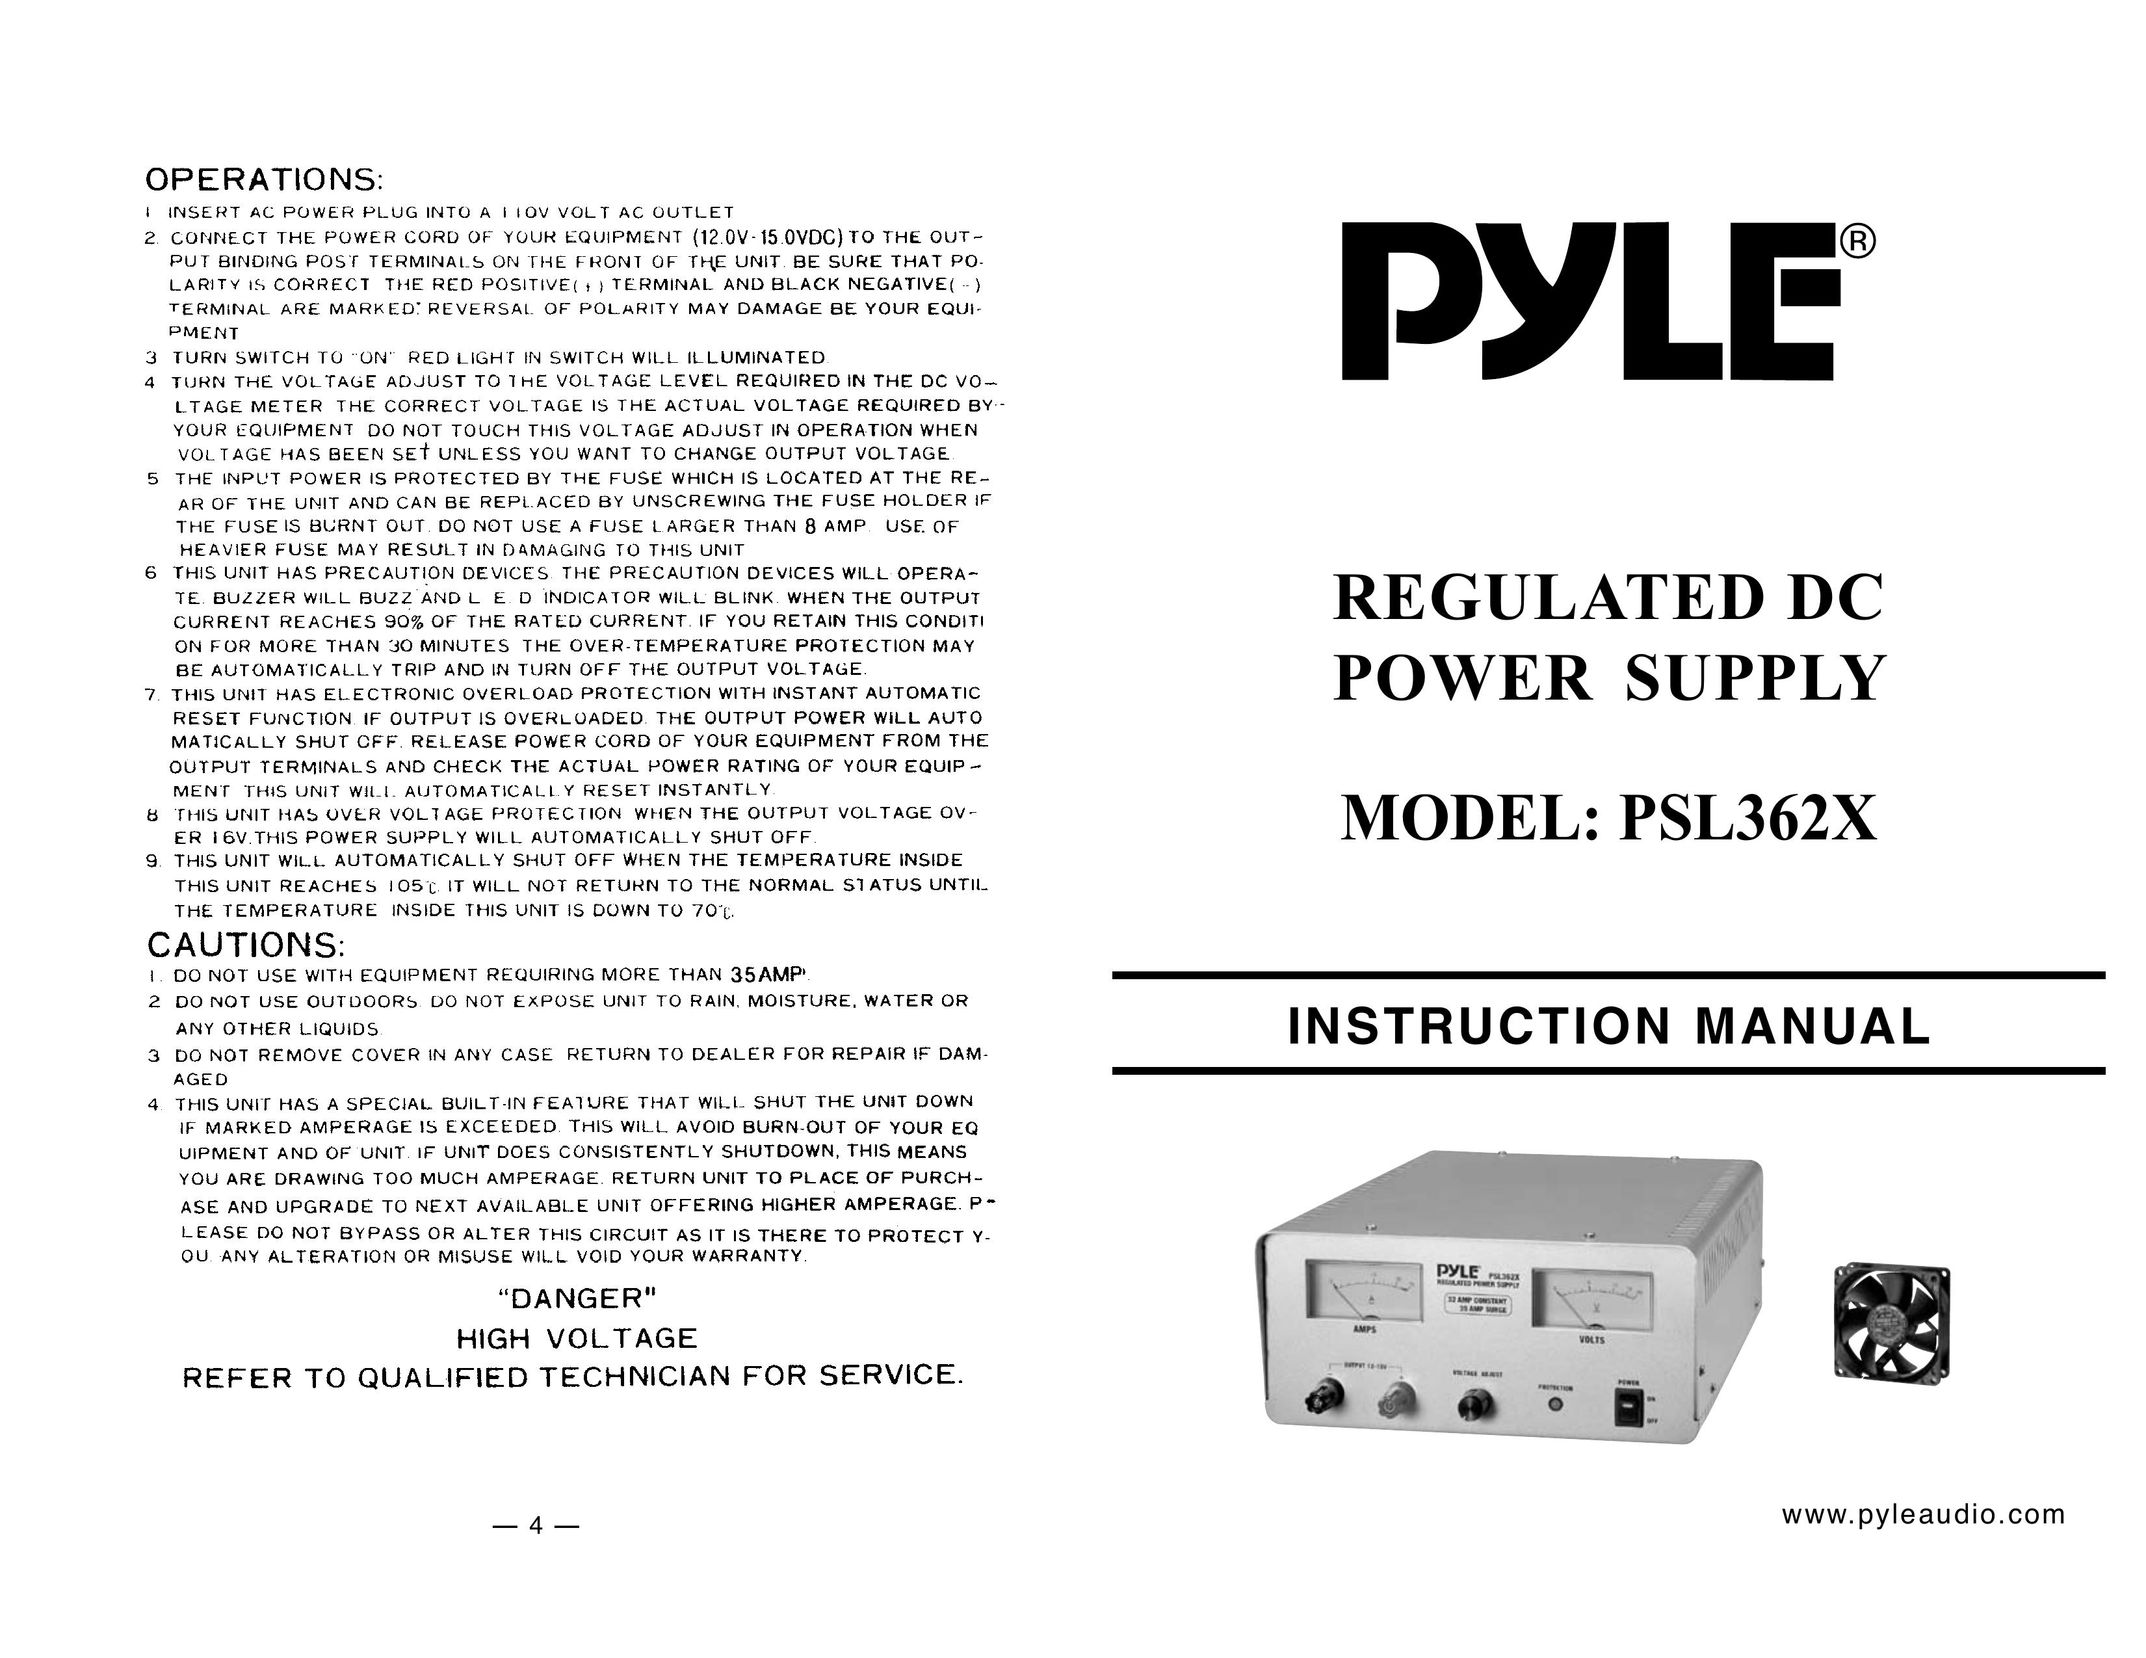 PYLE Audio PSL362X Power Supply User Manual